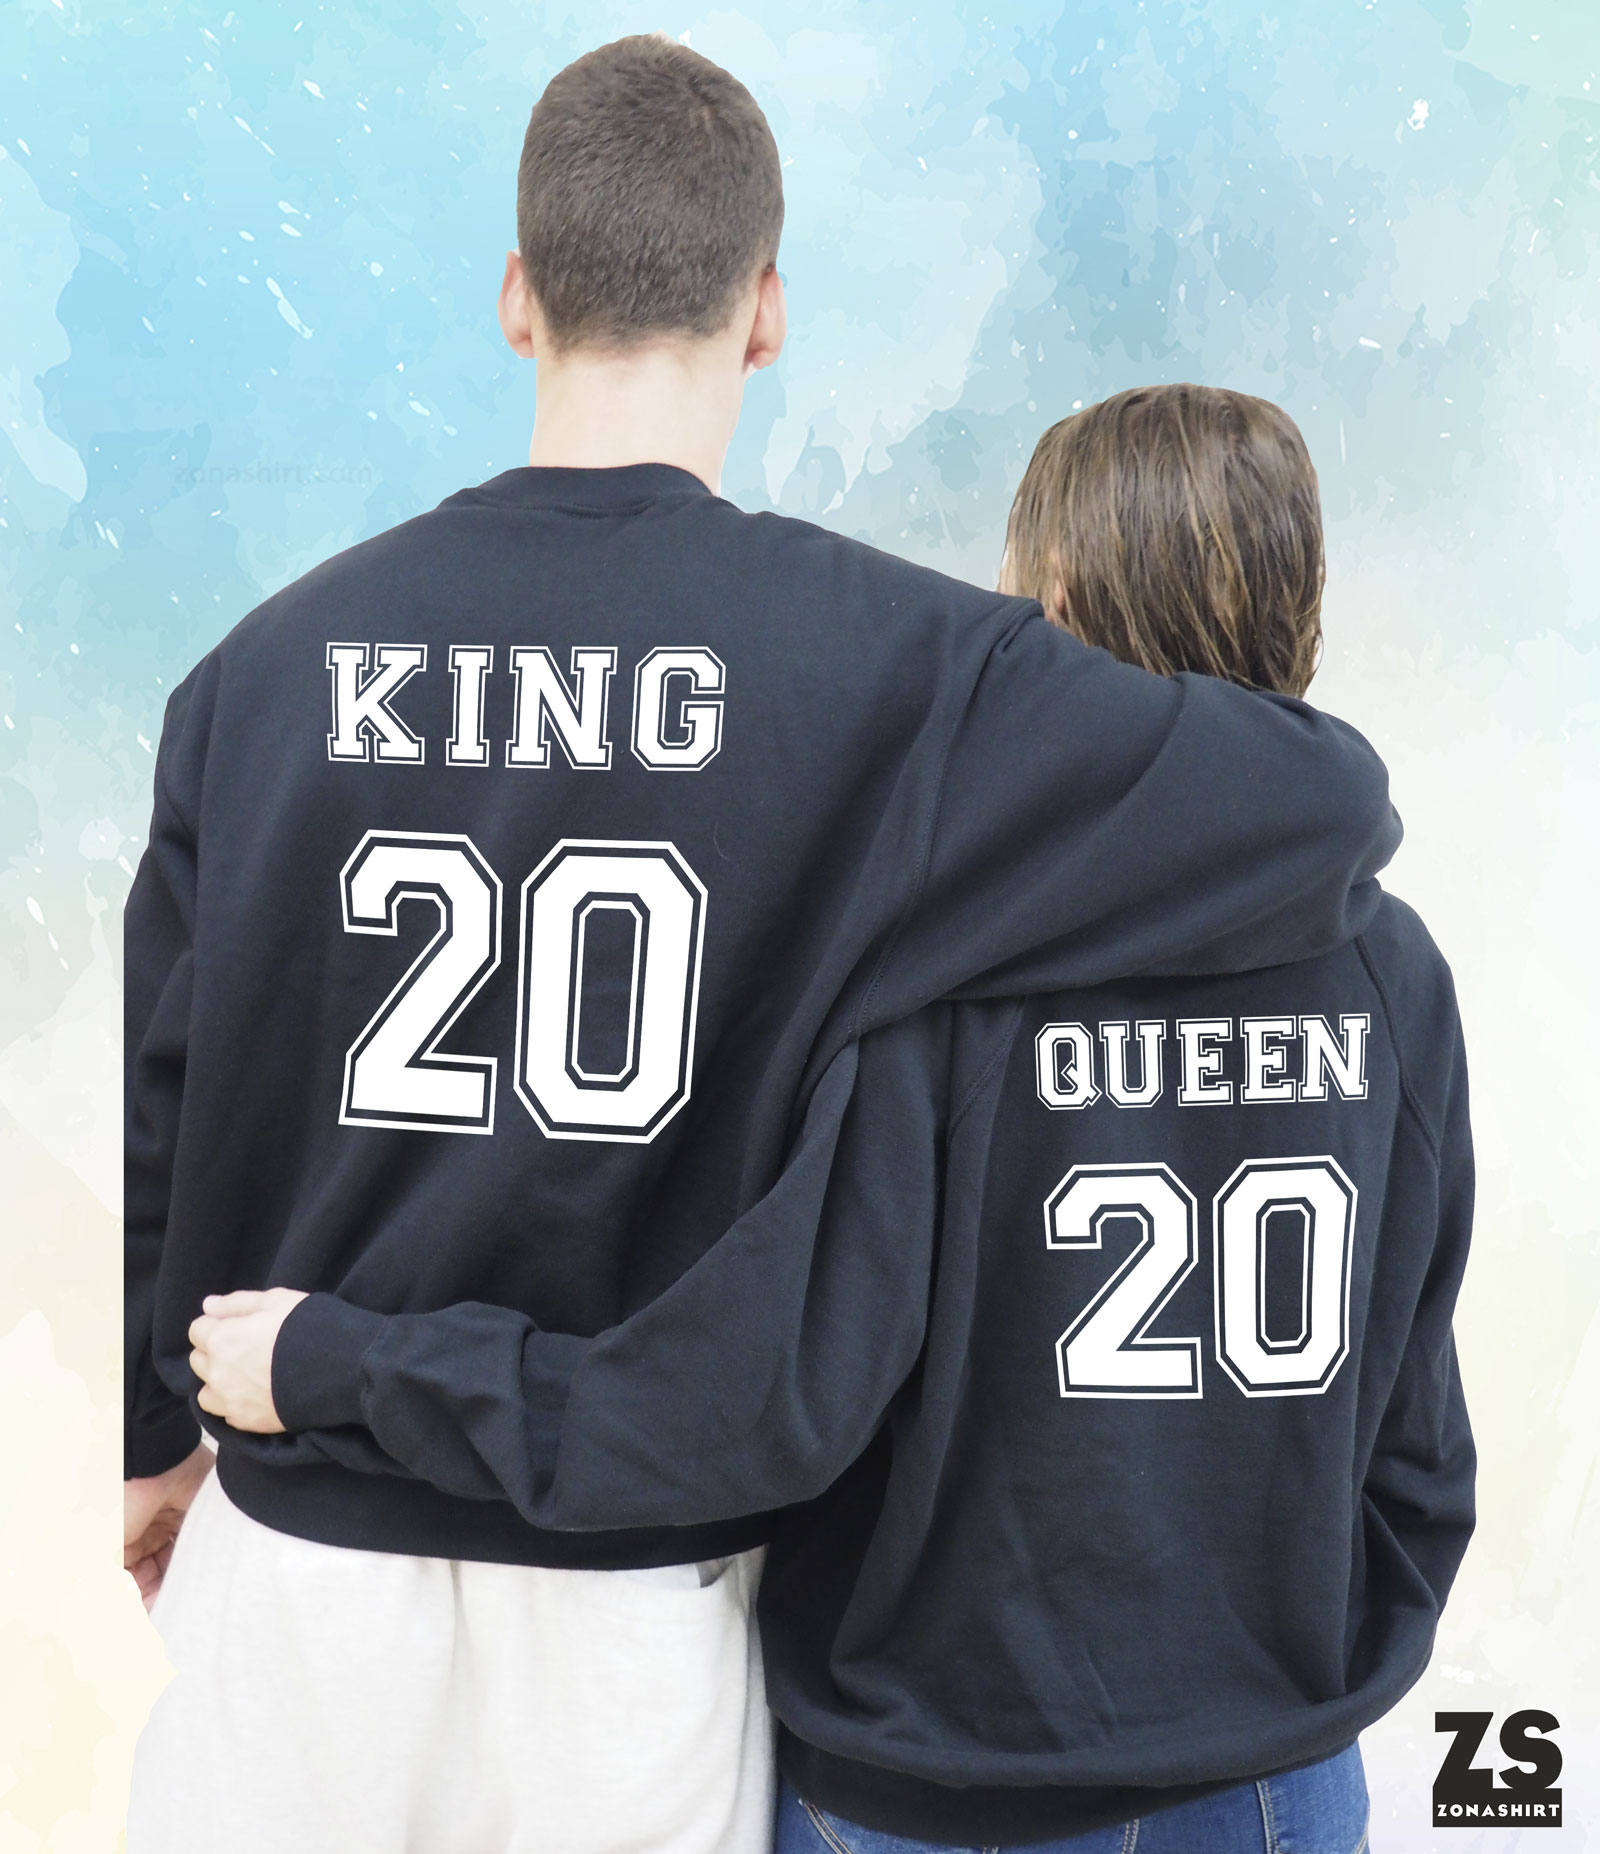 King queen hoodie Etsy España